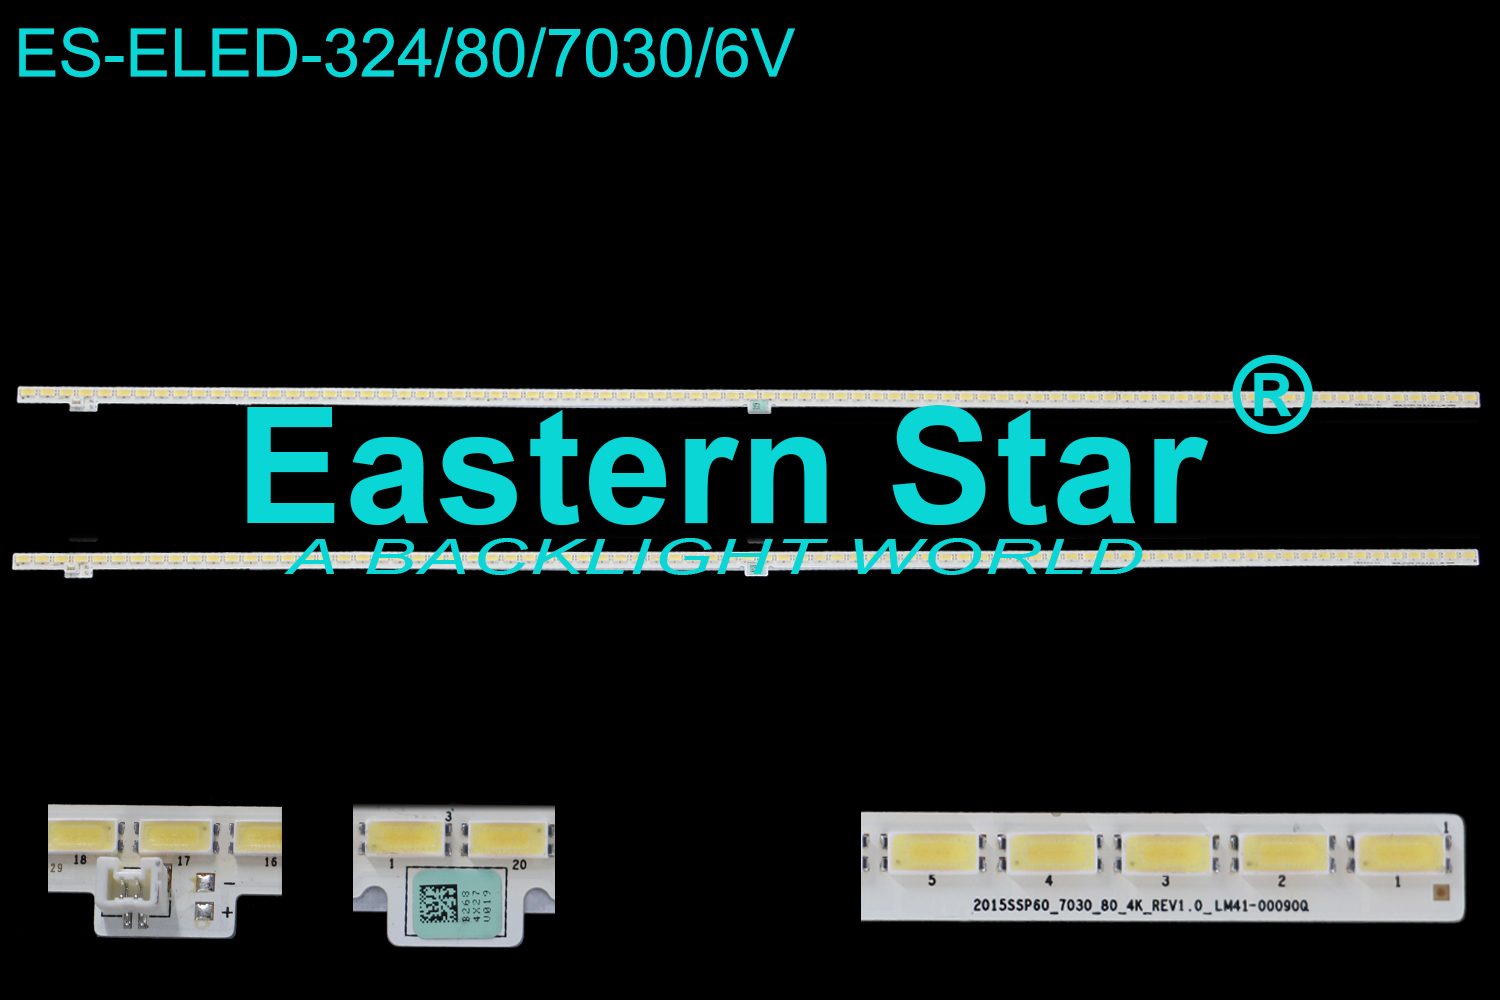 ES-ELED-324 ELED/EDGE TV backlight use for 60'' Sharp LC-60UD27U LC-60UE30U 2015SSP60_7030_80_4K_REV1.0_LM41-00090Q LED STRIPS(2)